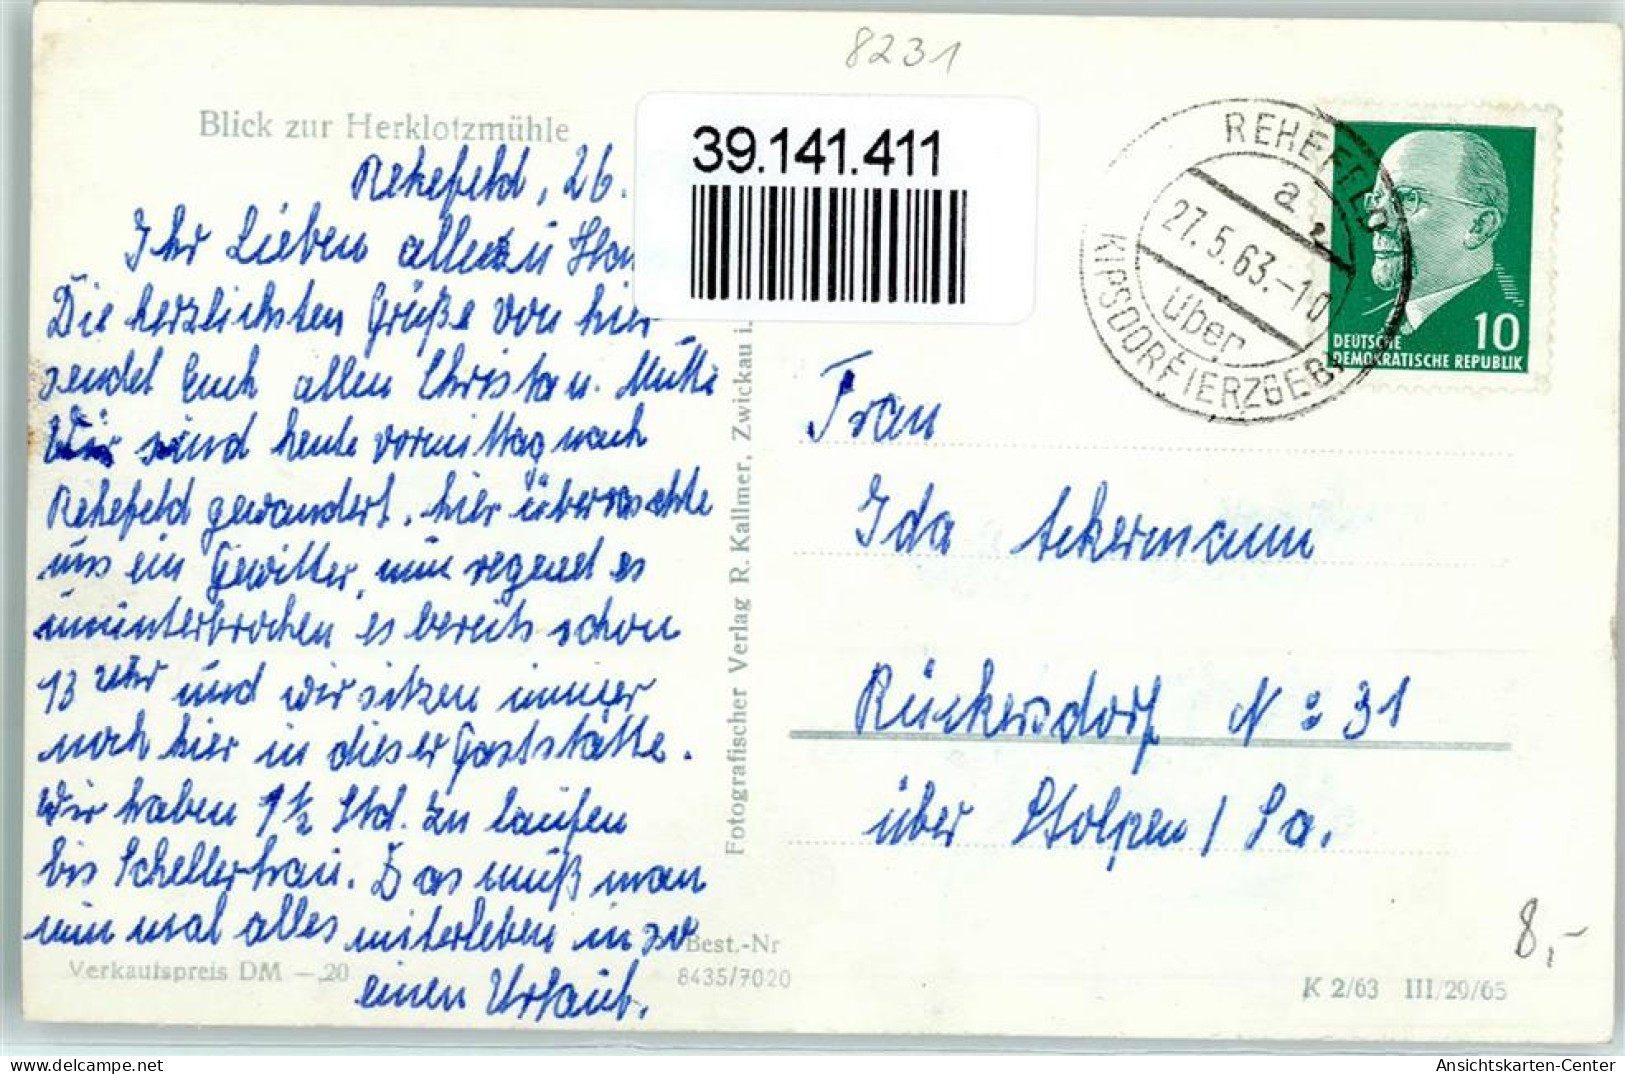 39141411 - Rehefeld-Zaunhaus - Altenberg